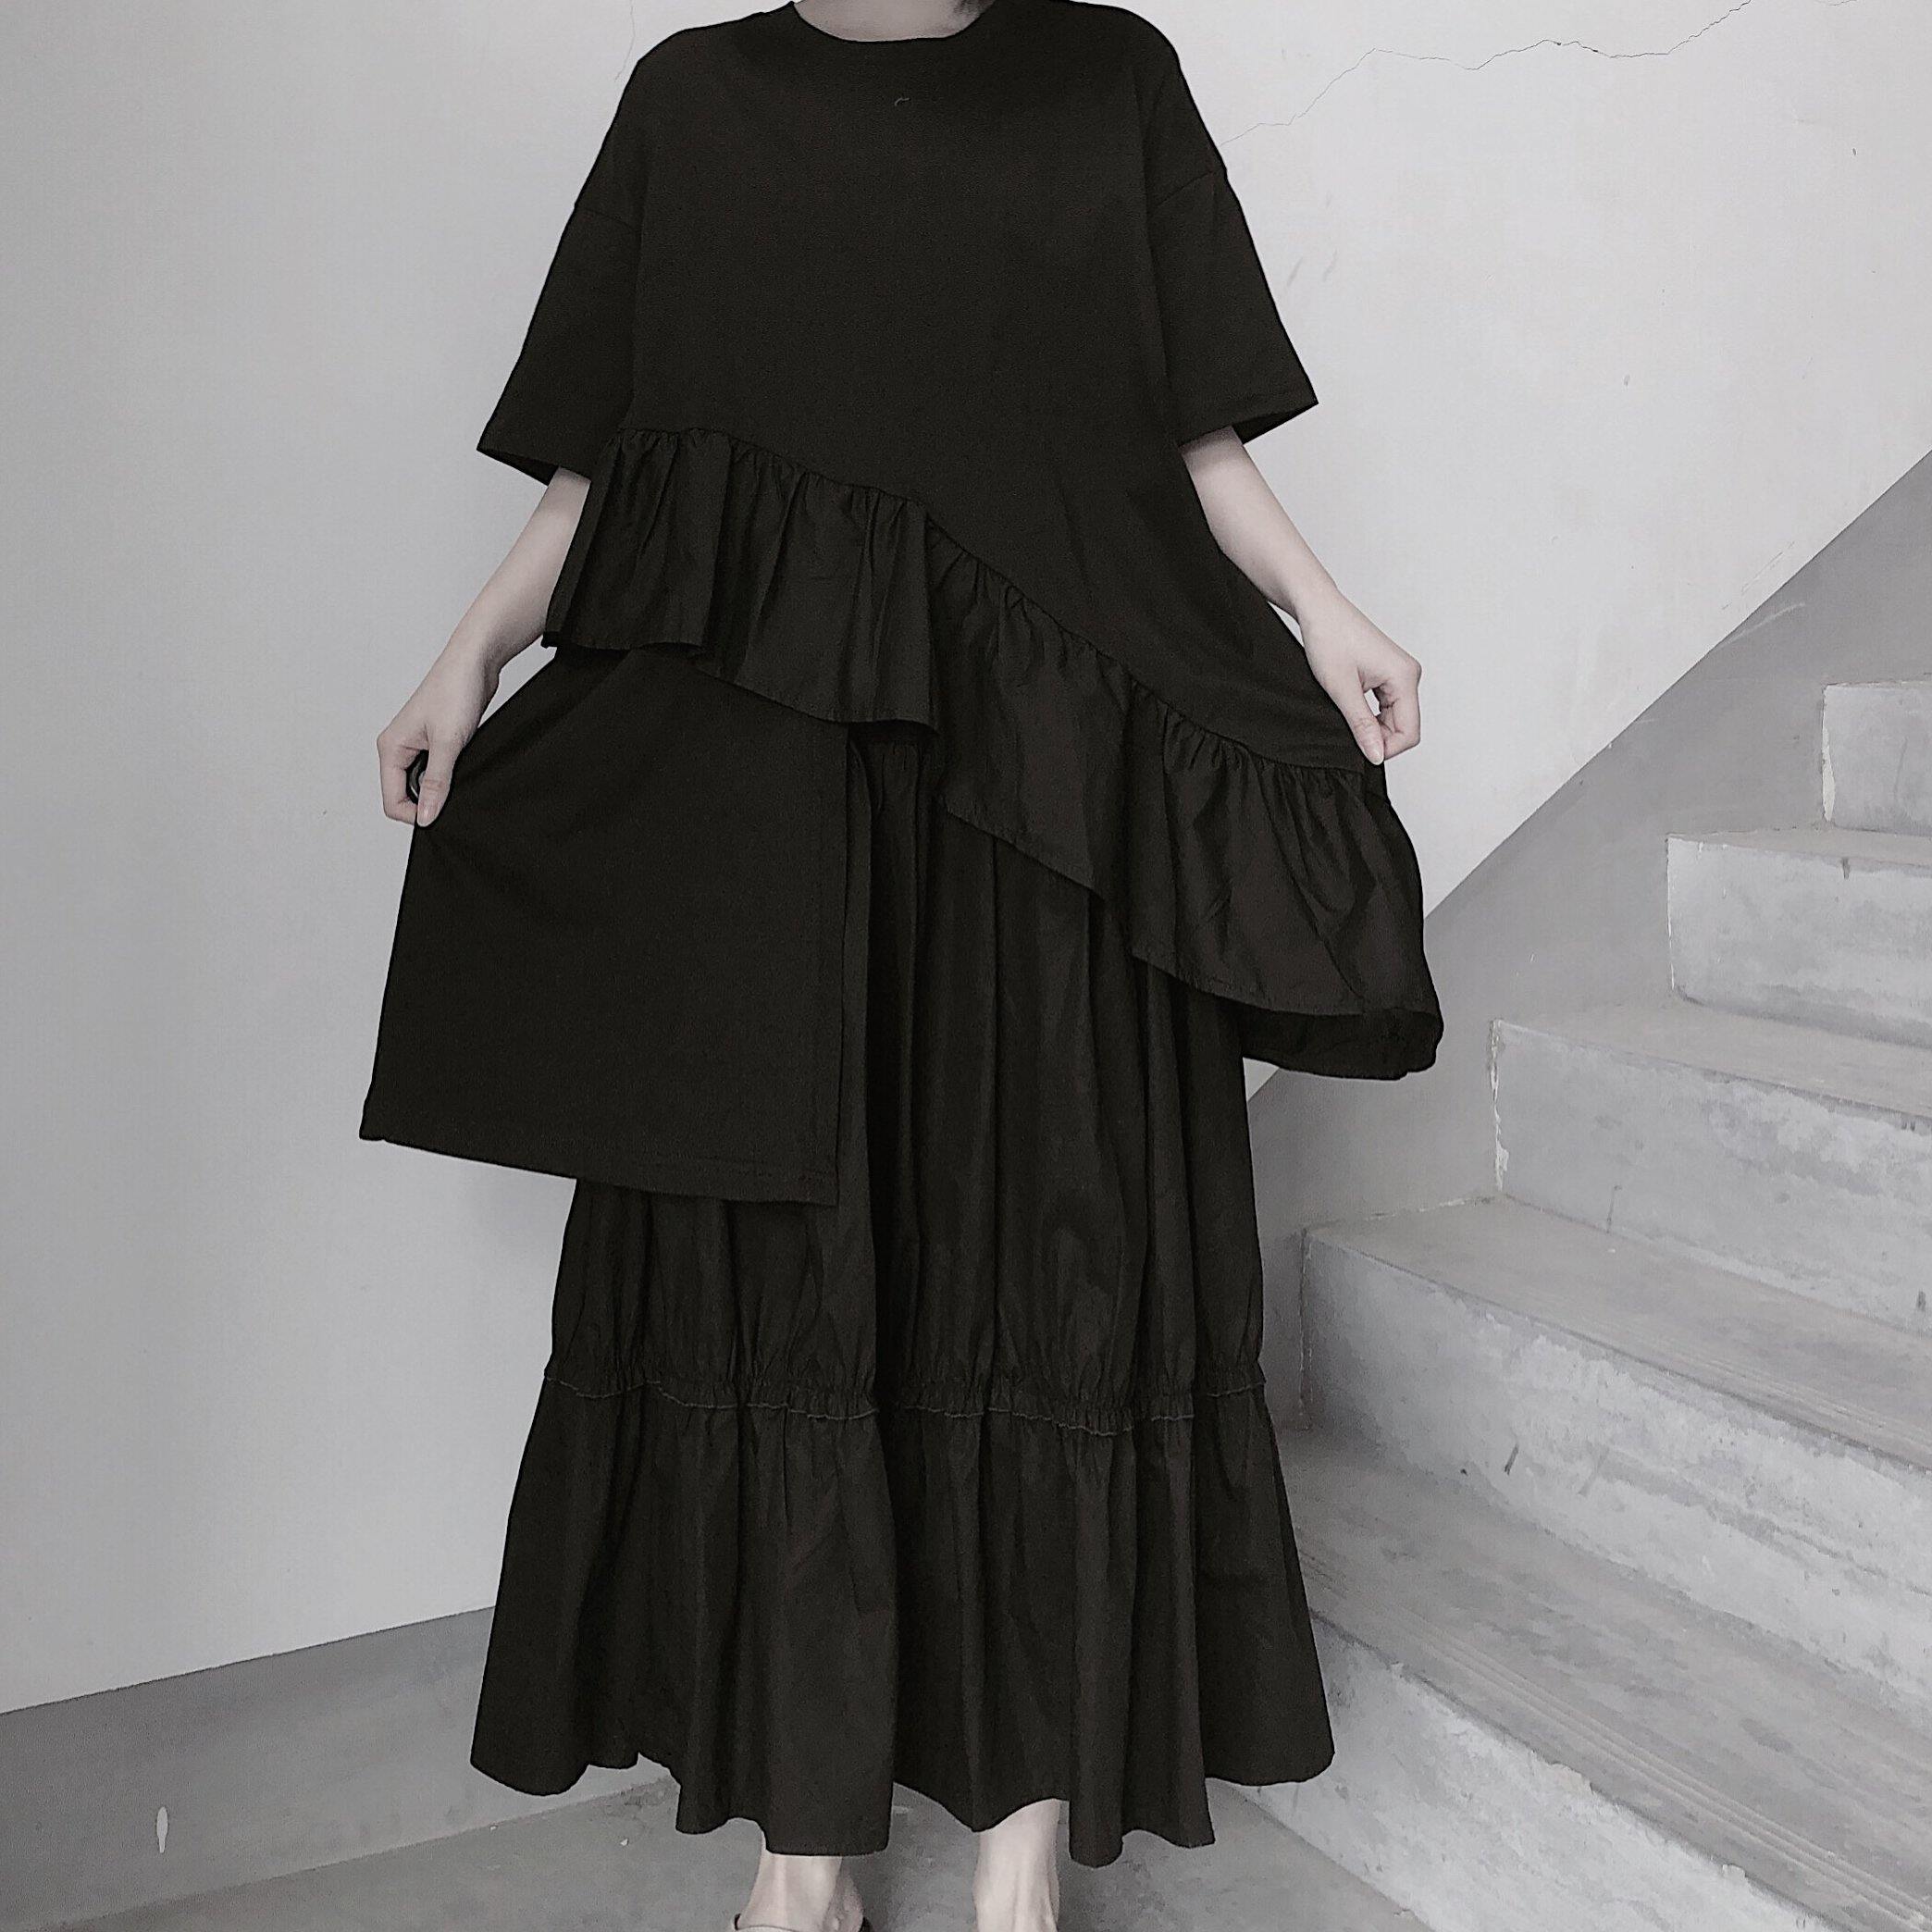 Italian O Neck Ruffles Asymmetric Tunic Top Fashion Ideas Black Blouses - Omychic